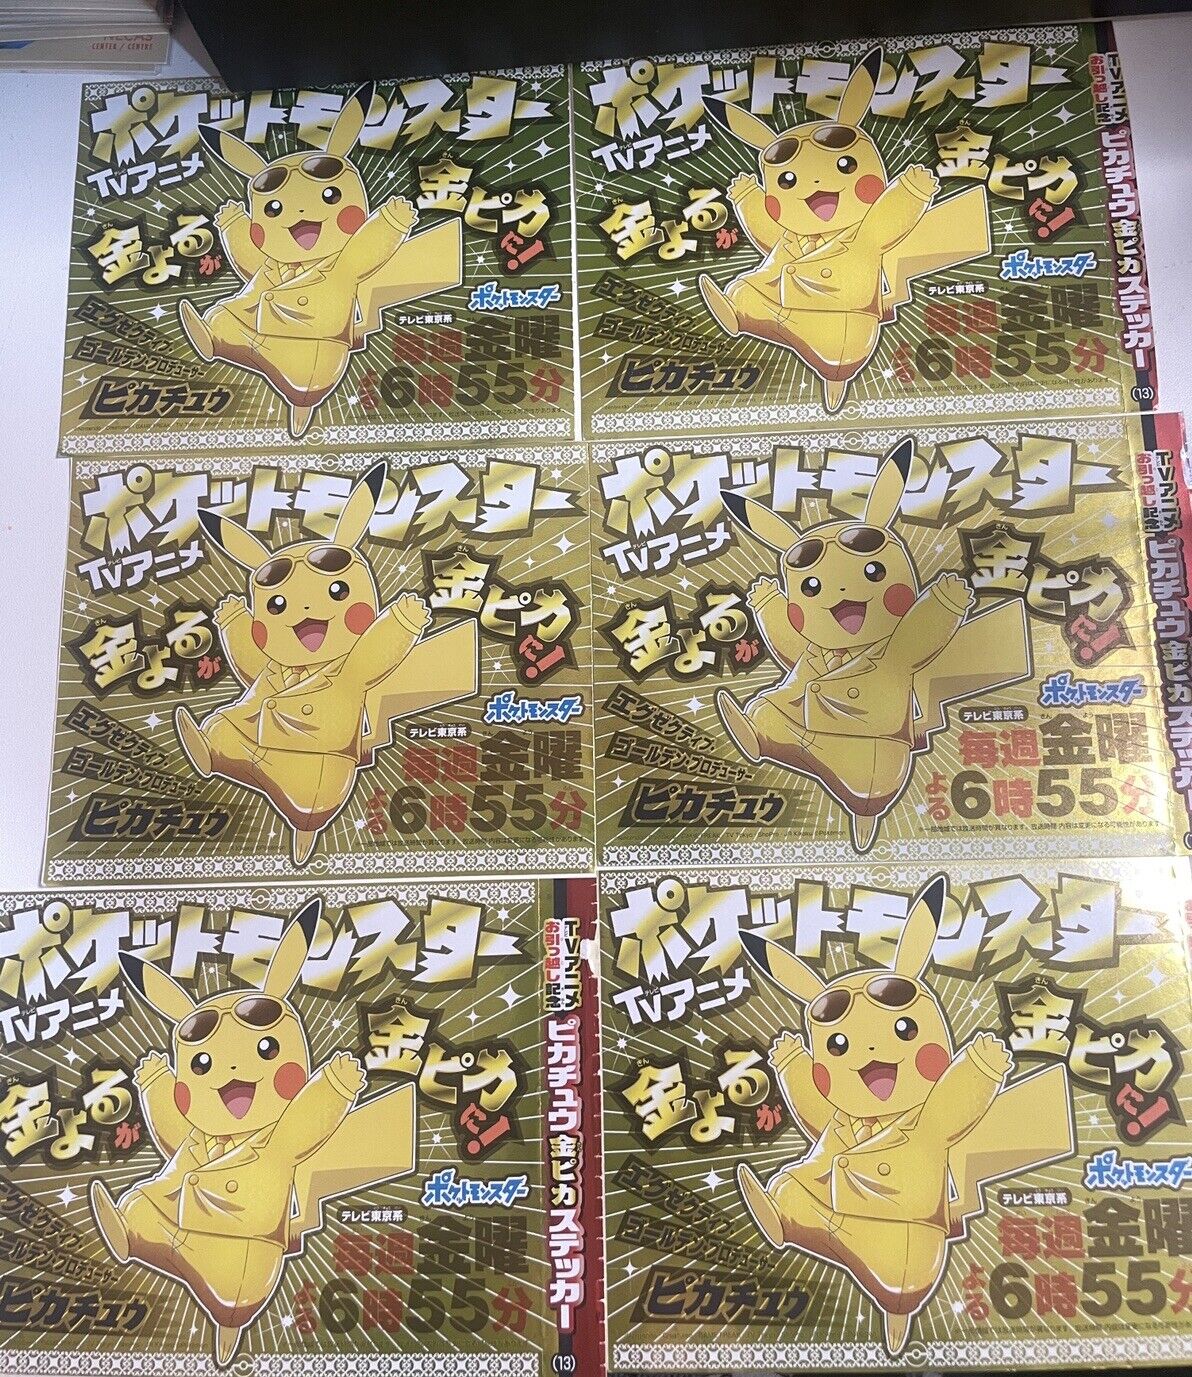 1x Pokemon Japanese CoroCoro Sticker Gold Plated - Pikachu Gold Suit Nov 2020